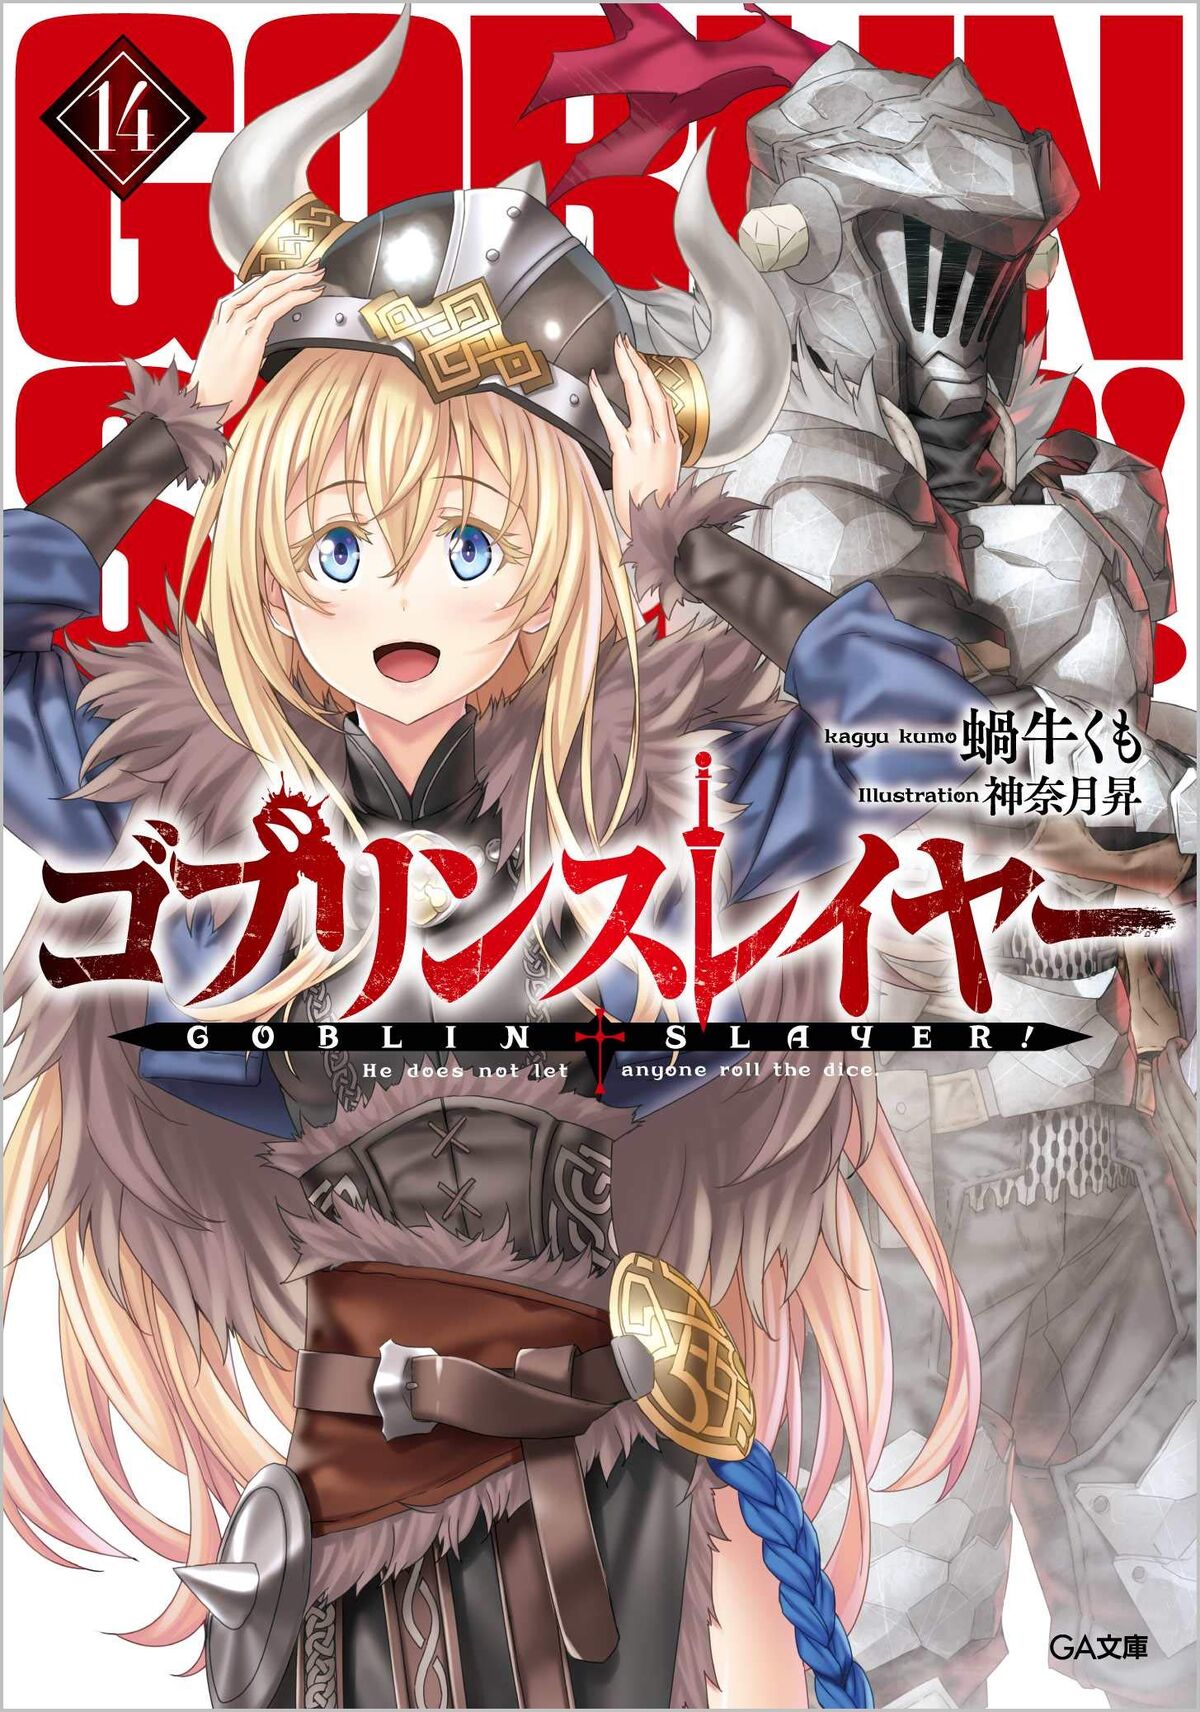 Goblin Slayer Light Novel Series Gets TV Anime - News - Anime News